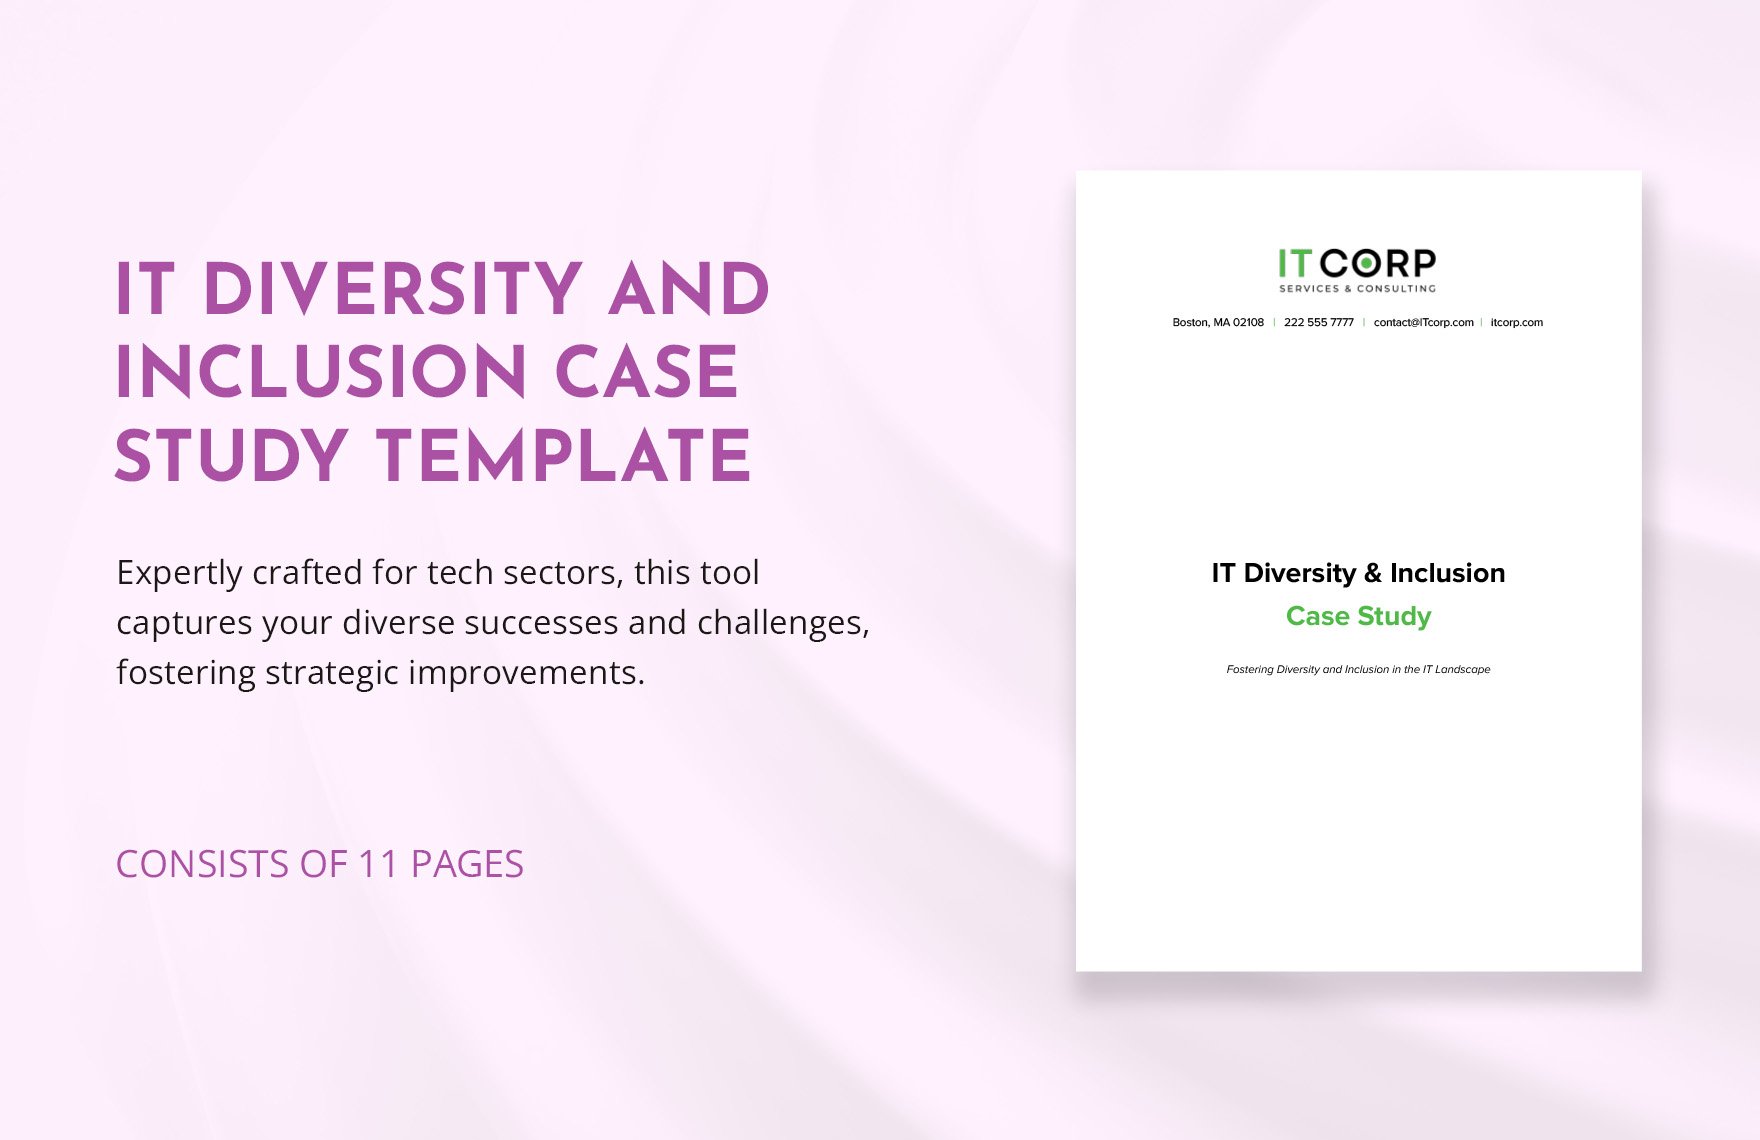 IT Diversity & Inclusion Case Study Template